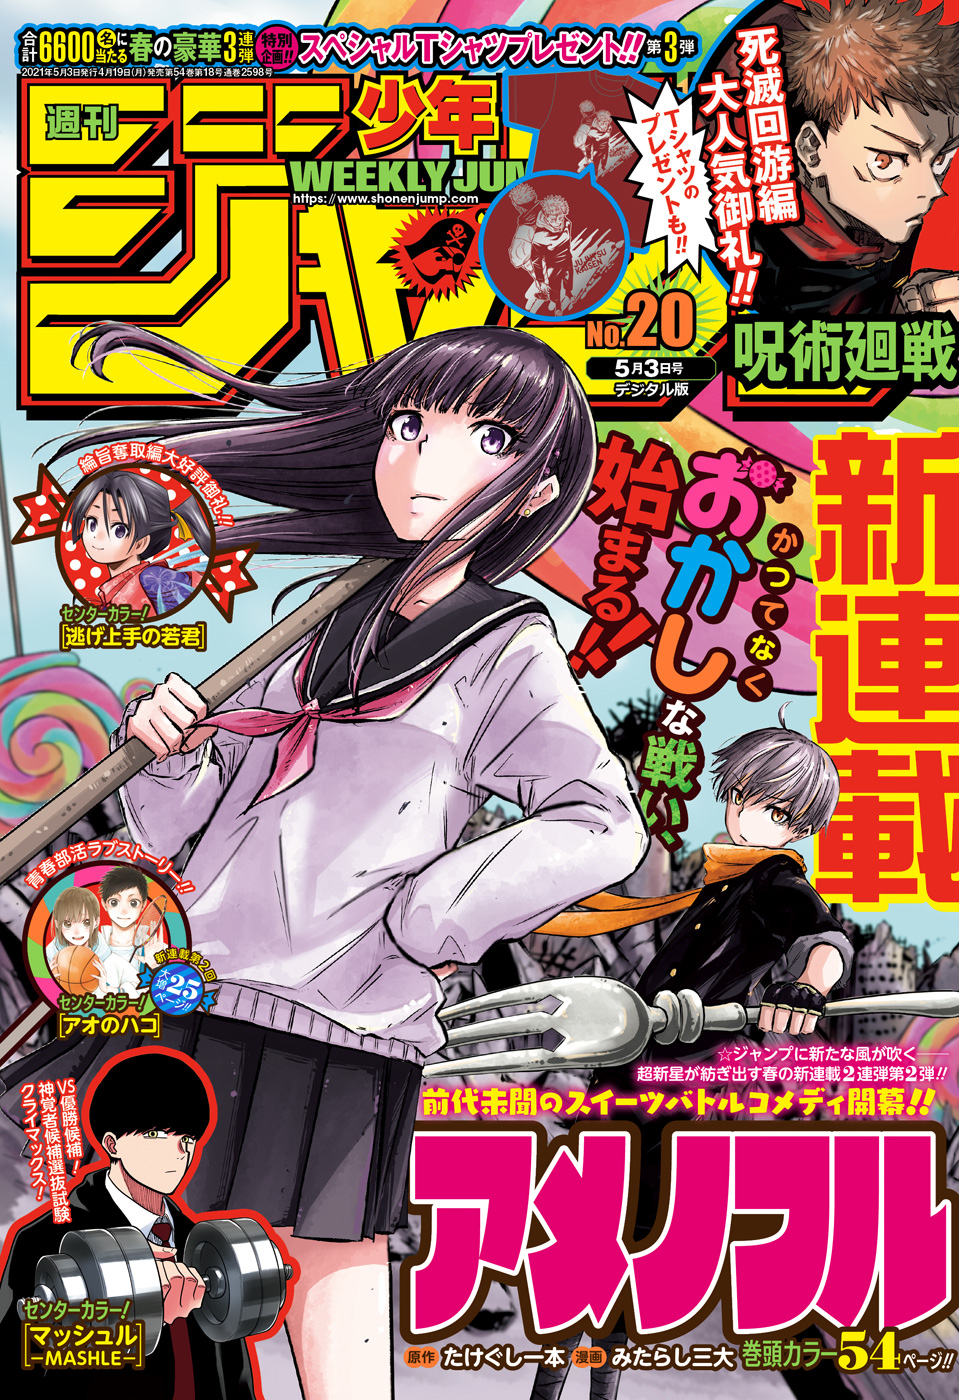 Weekly Shonen Jump Issue 21 Jump Database Fandom